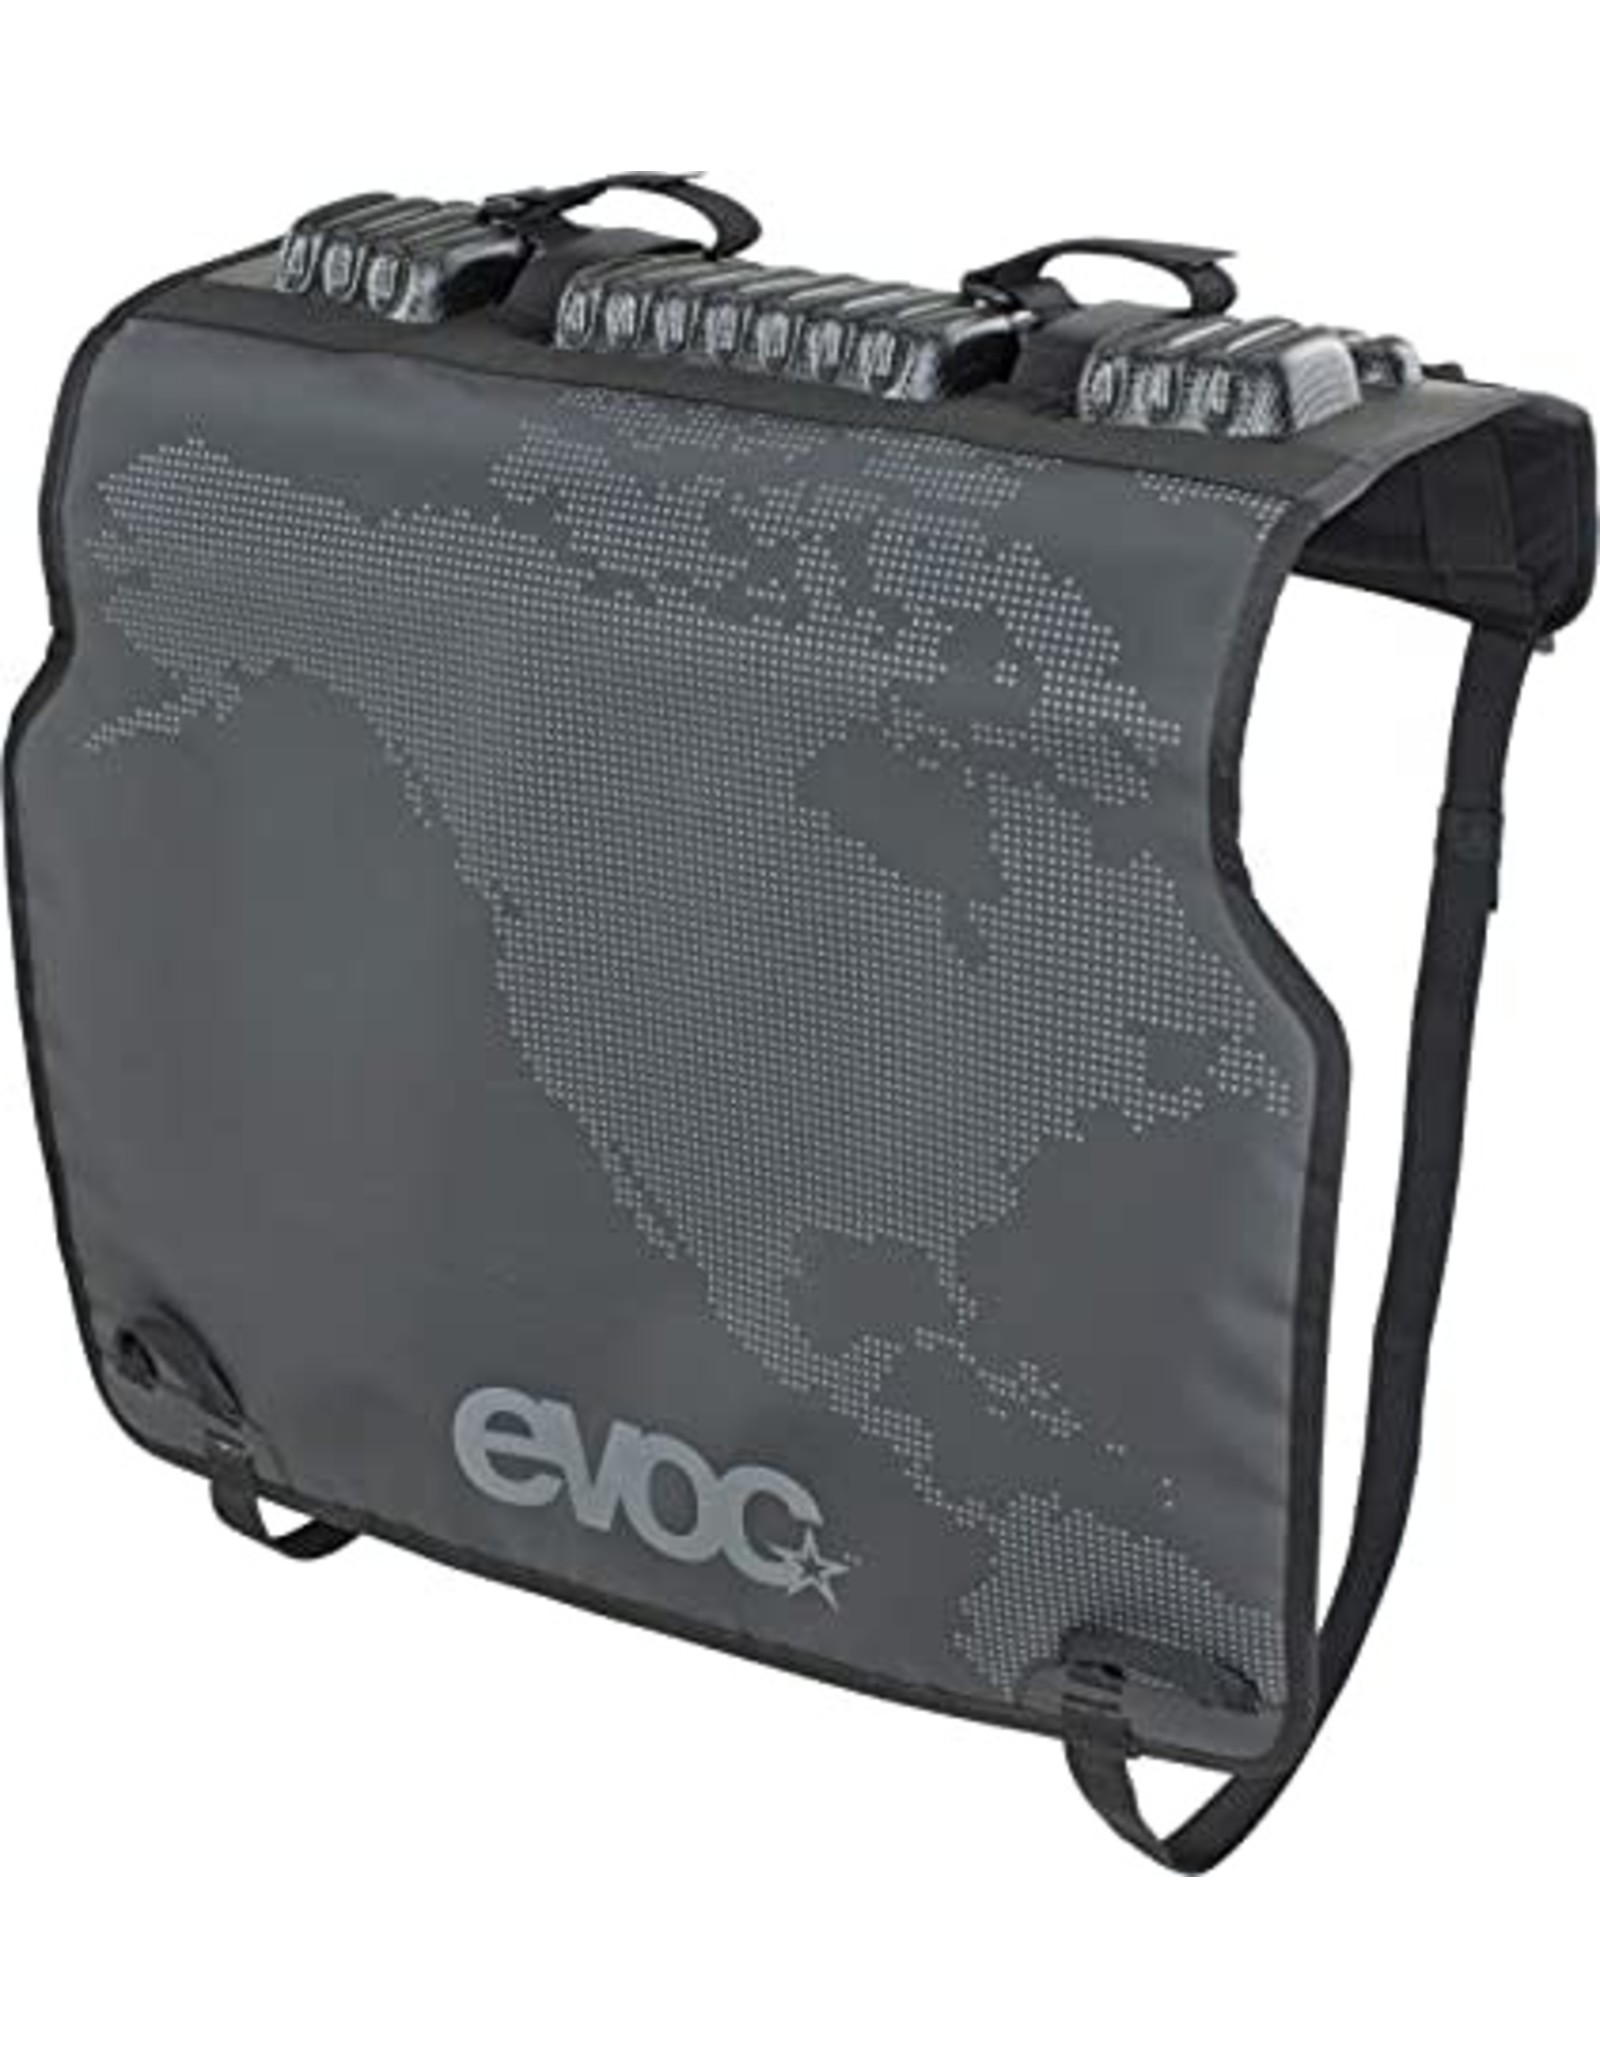 EVOC EVOC - Tailgate Pad Duo Fits all trucks, Black